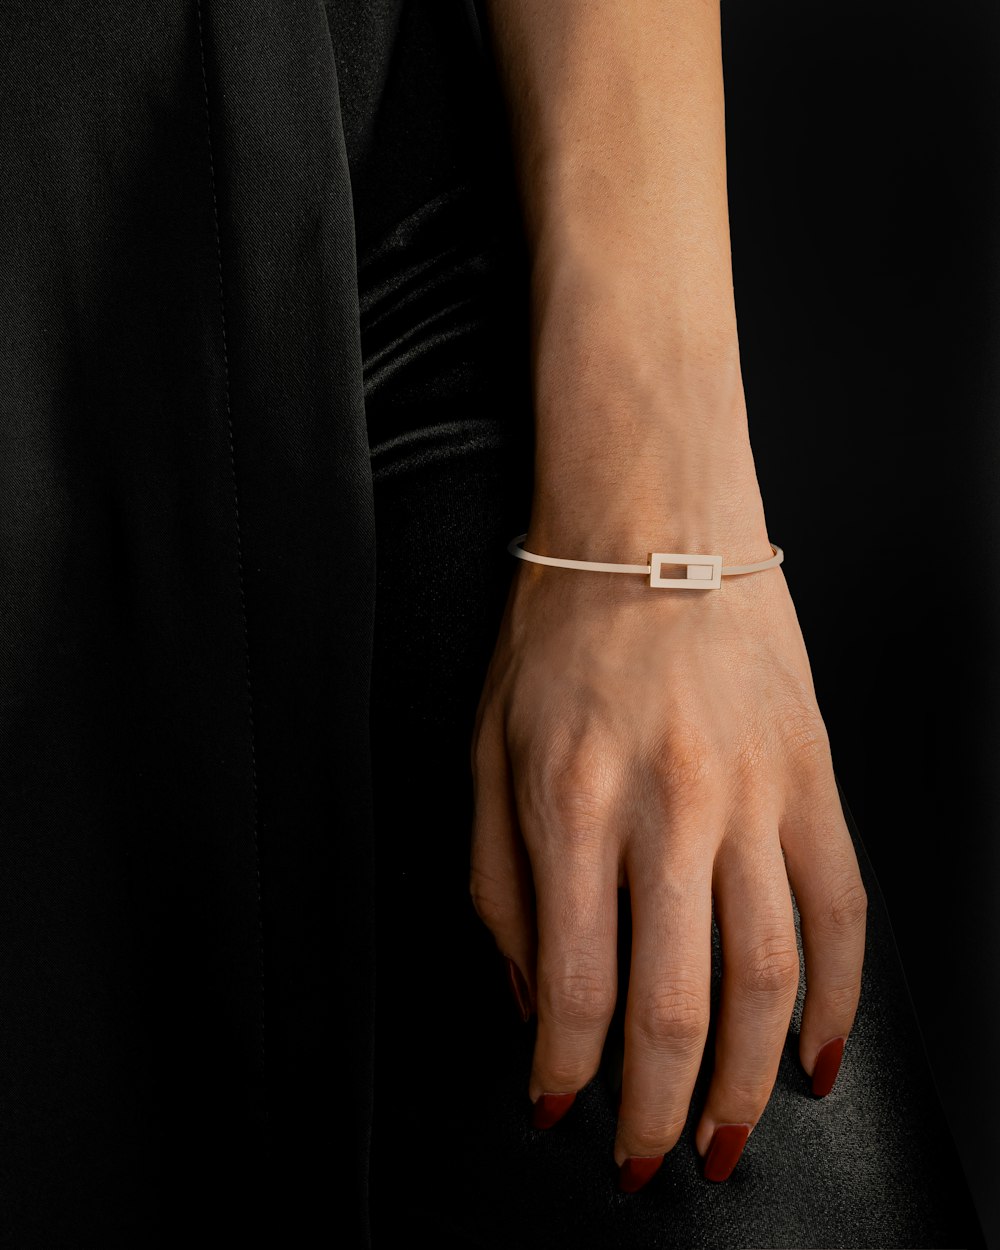 a woman's hand wearing a thin bracelet